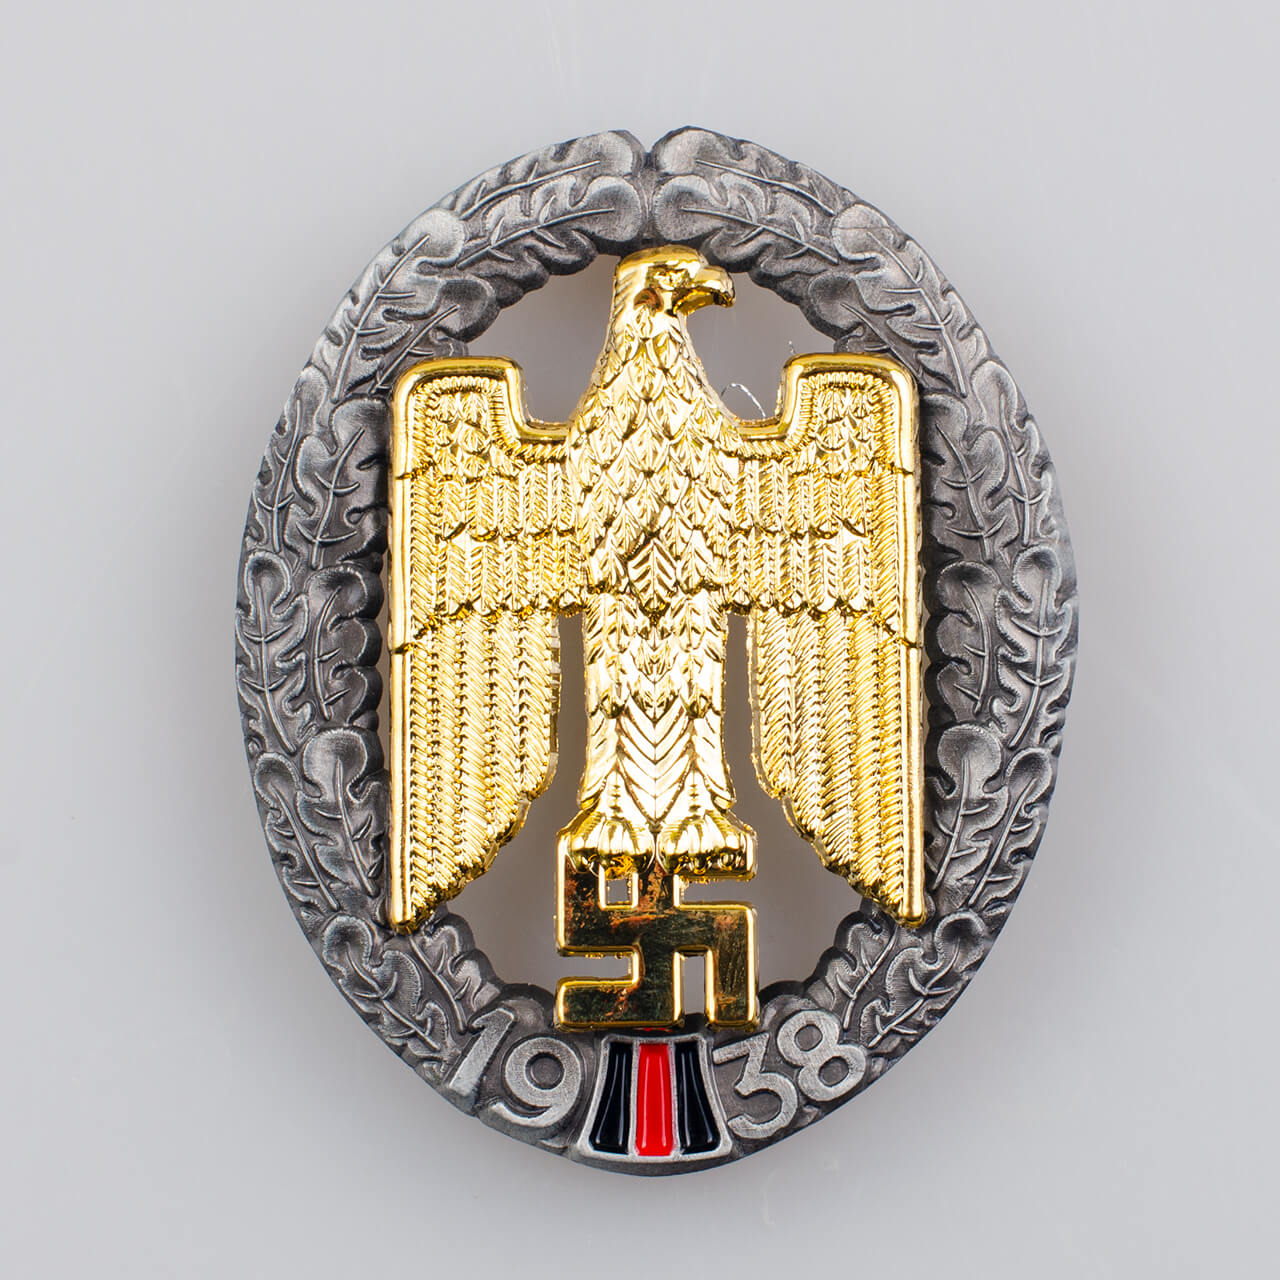 GAU - Odznaka Honorowa Sudetów (GAU-Ehrenzeichen Sudetenland) - III Rzesza